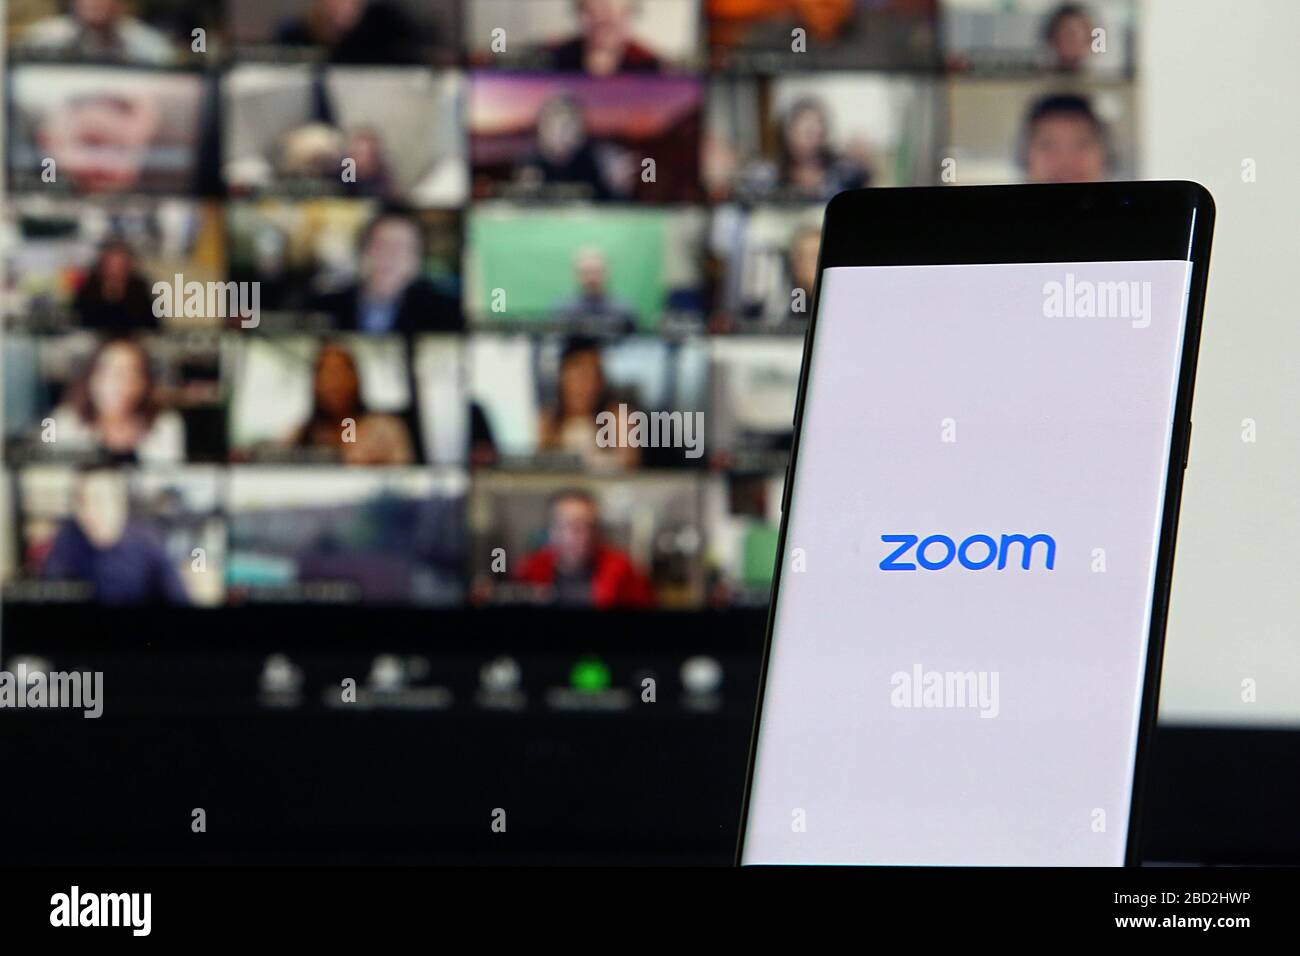 April 2020. Istanbul/Türkei. Smartphone mit der App "Zoom Cloud Meetings", Stockfoto